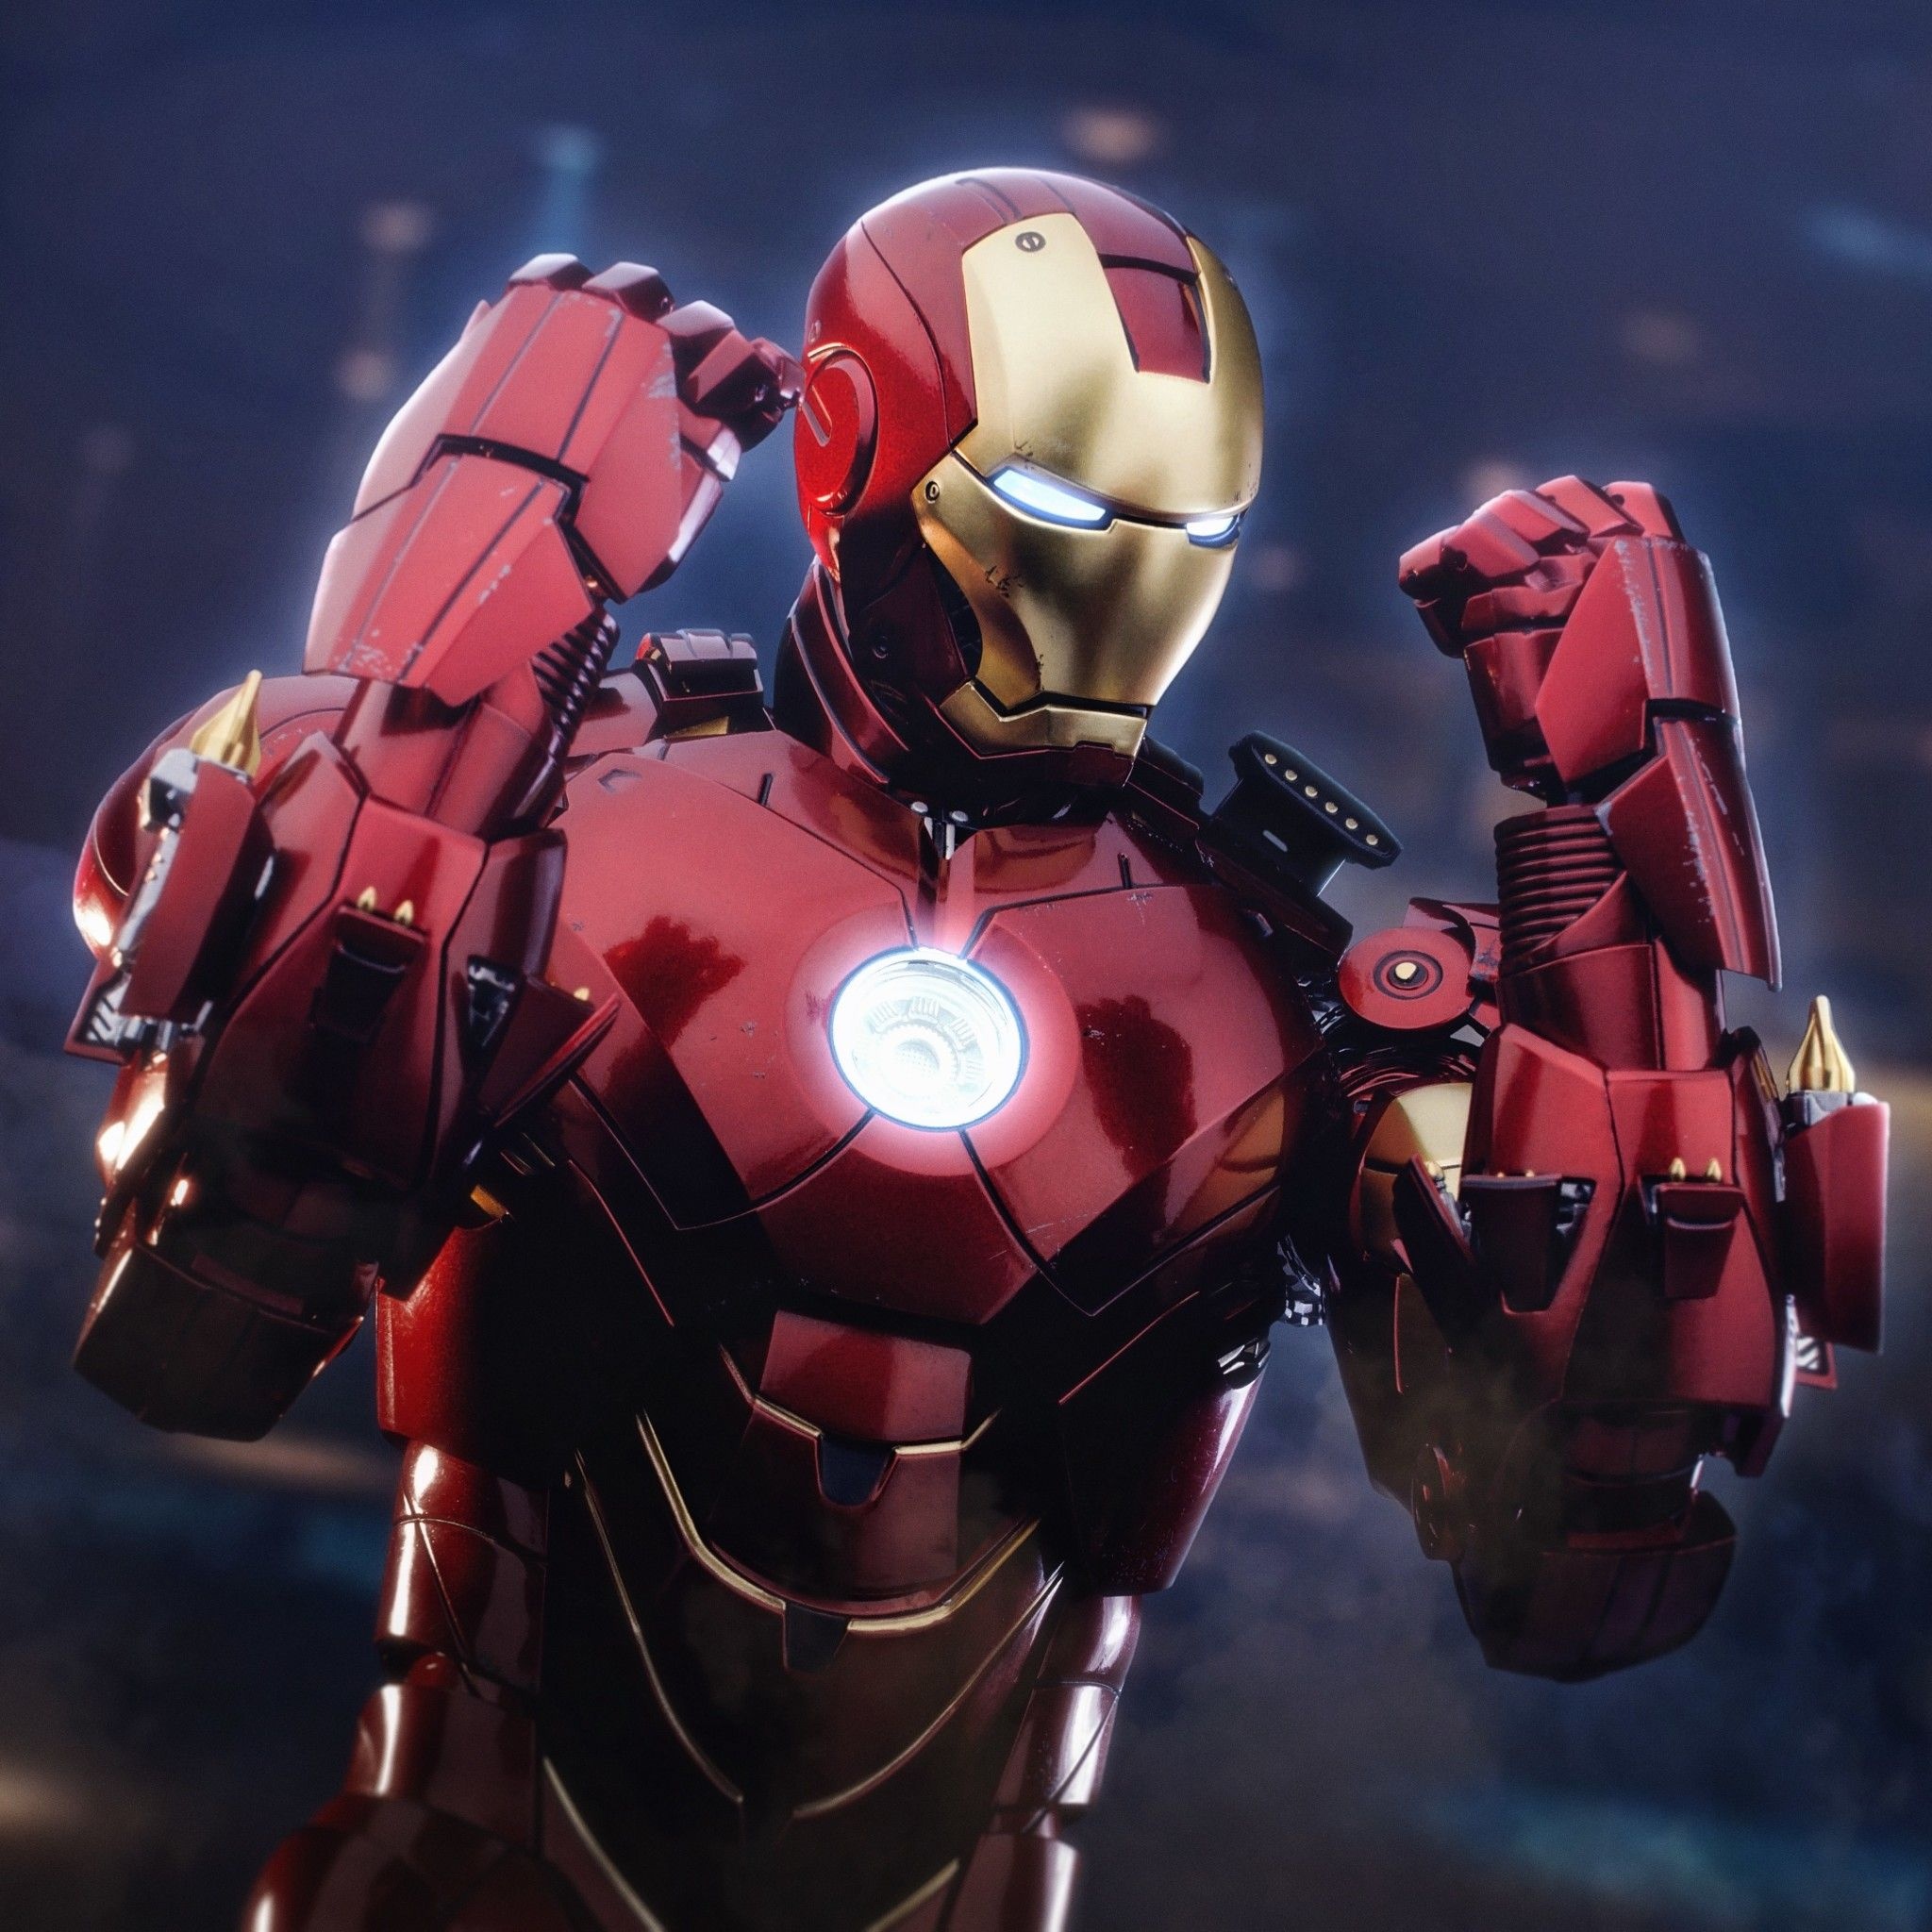 Iron Man Suit, Iron Man 4, 4K wallpapers, 2050x2050 HD Handy